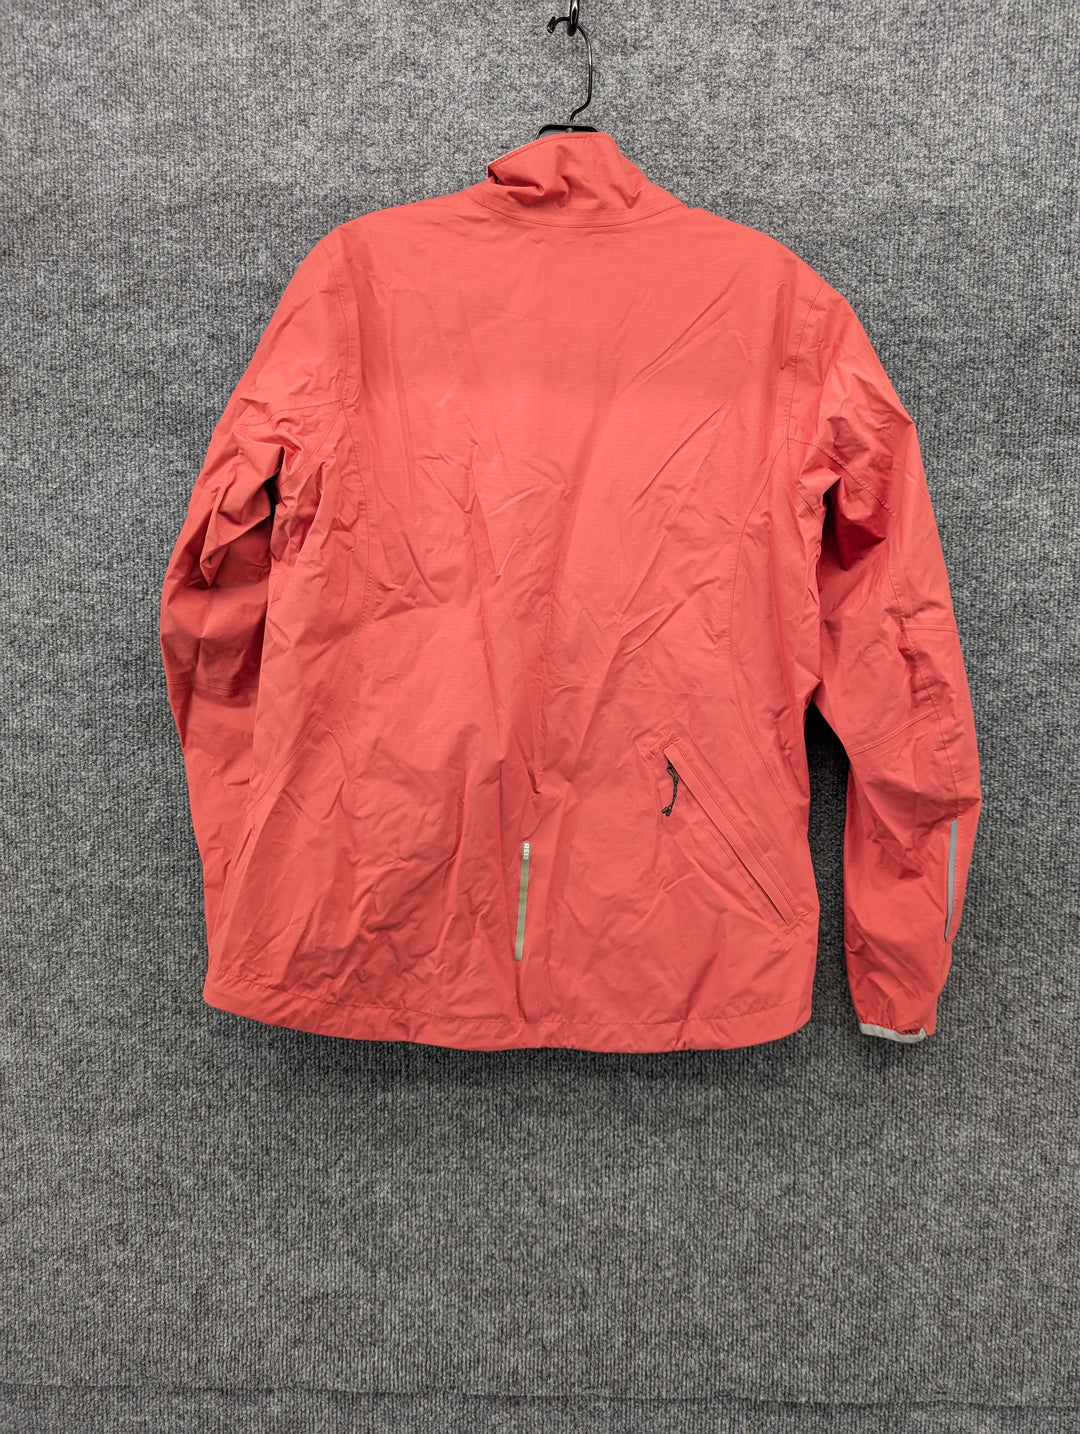 REI Size W Medium Women's Rain Jacket